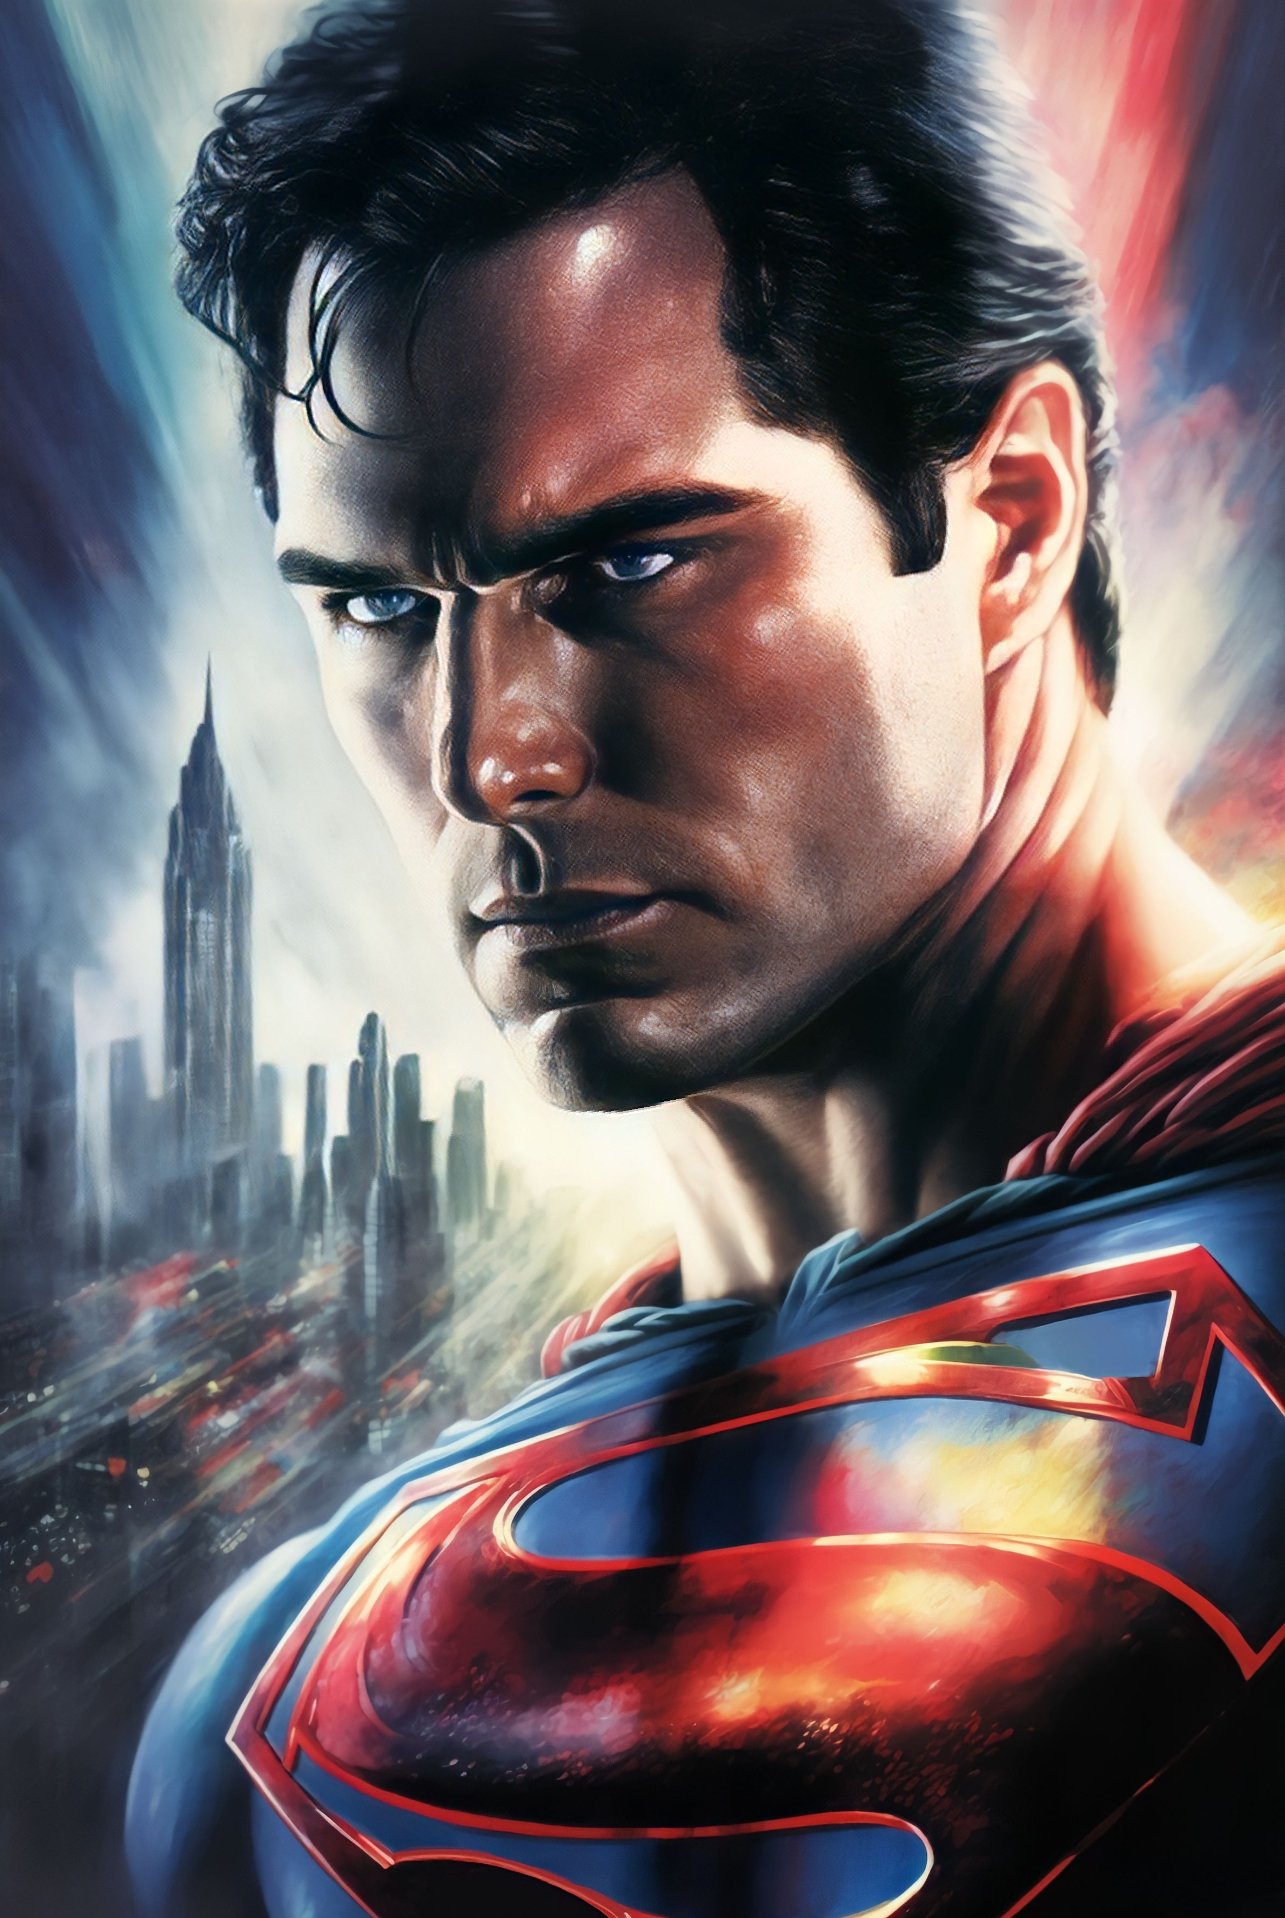 Superman - Man Of Steel 2 Poster by BrunoBorg3s on DeviantArt